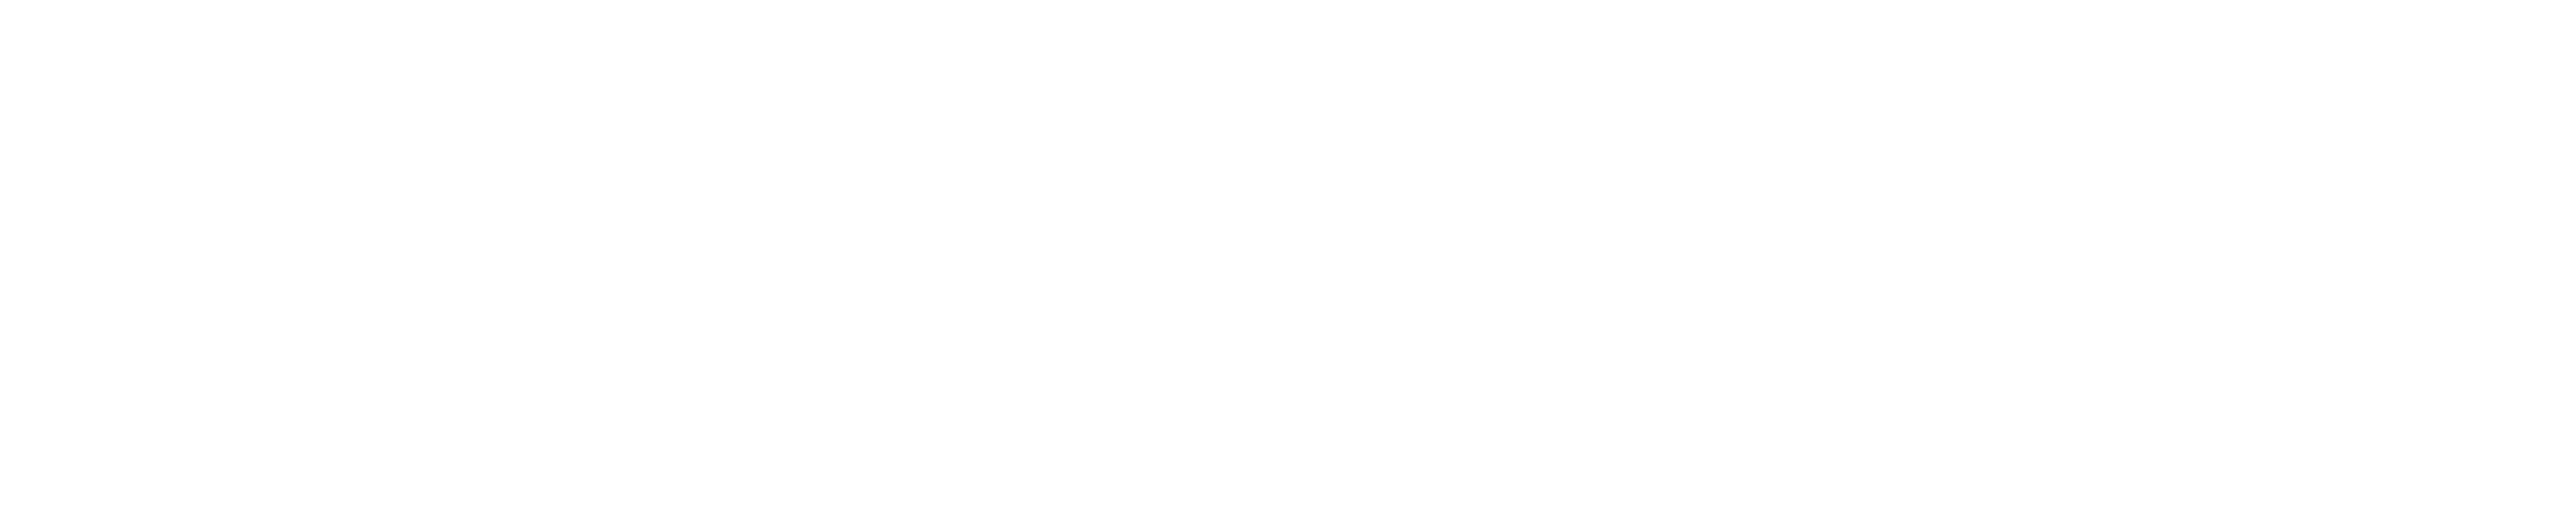 Stackblitz logo